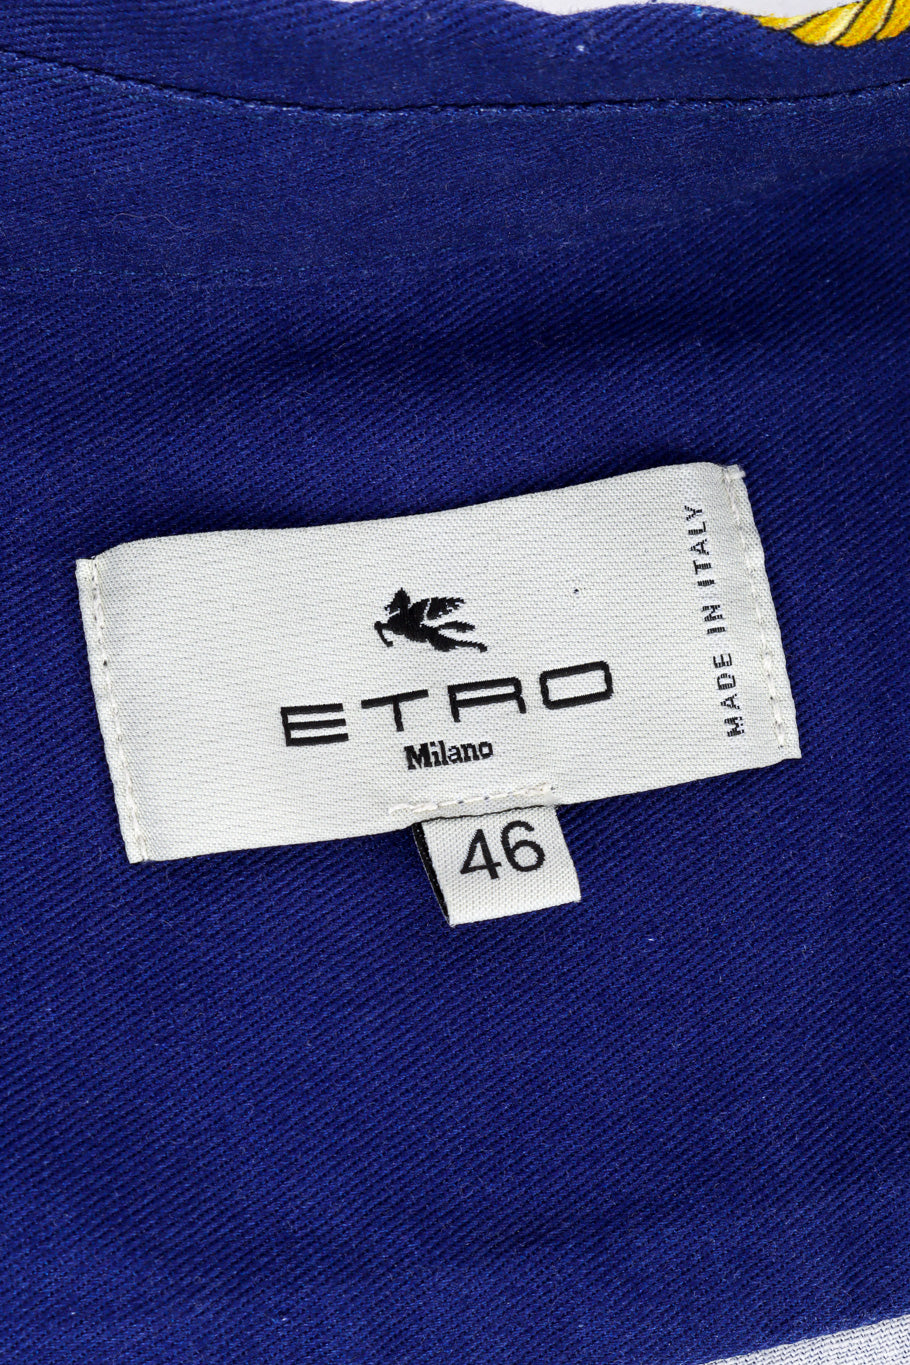 Etro 2021 S/S Nautical Cotton Tunic Dress signature label closeup @recessla